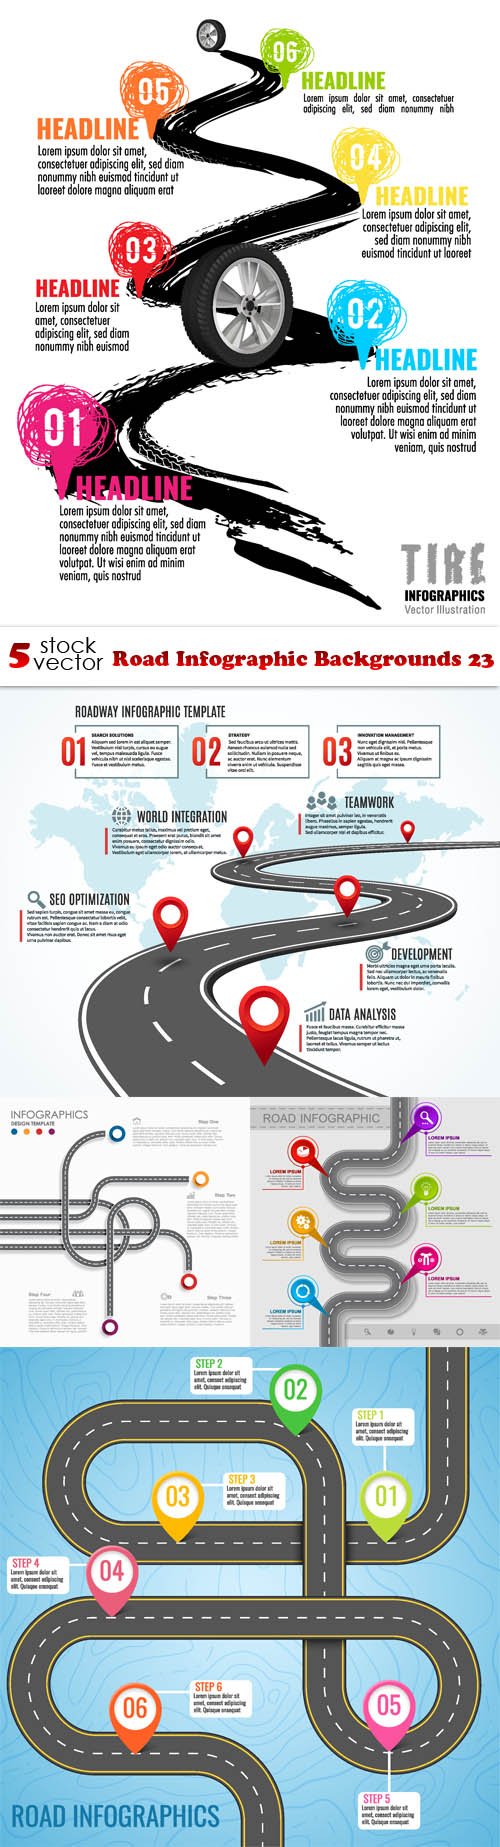 Vectors - Road Infographic Backgrounds 24